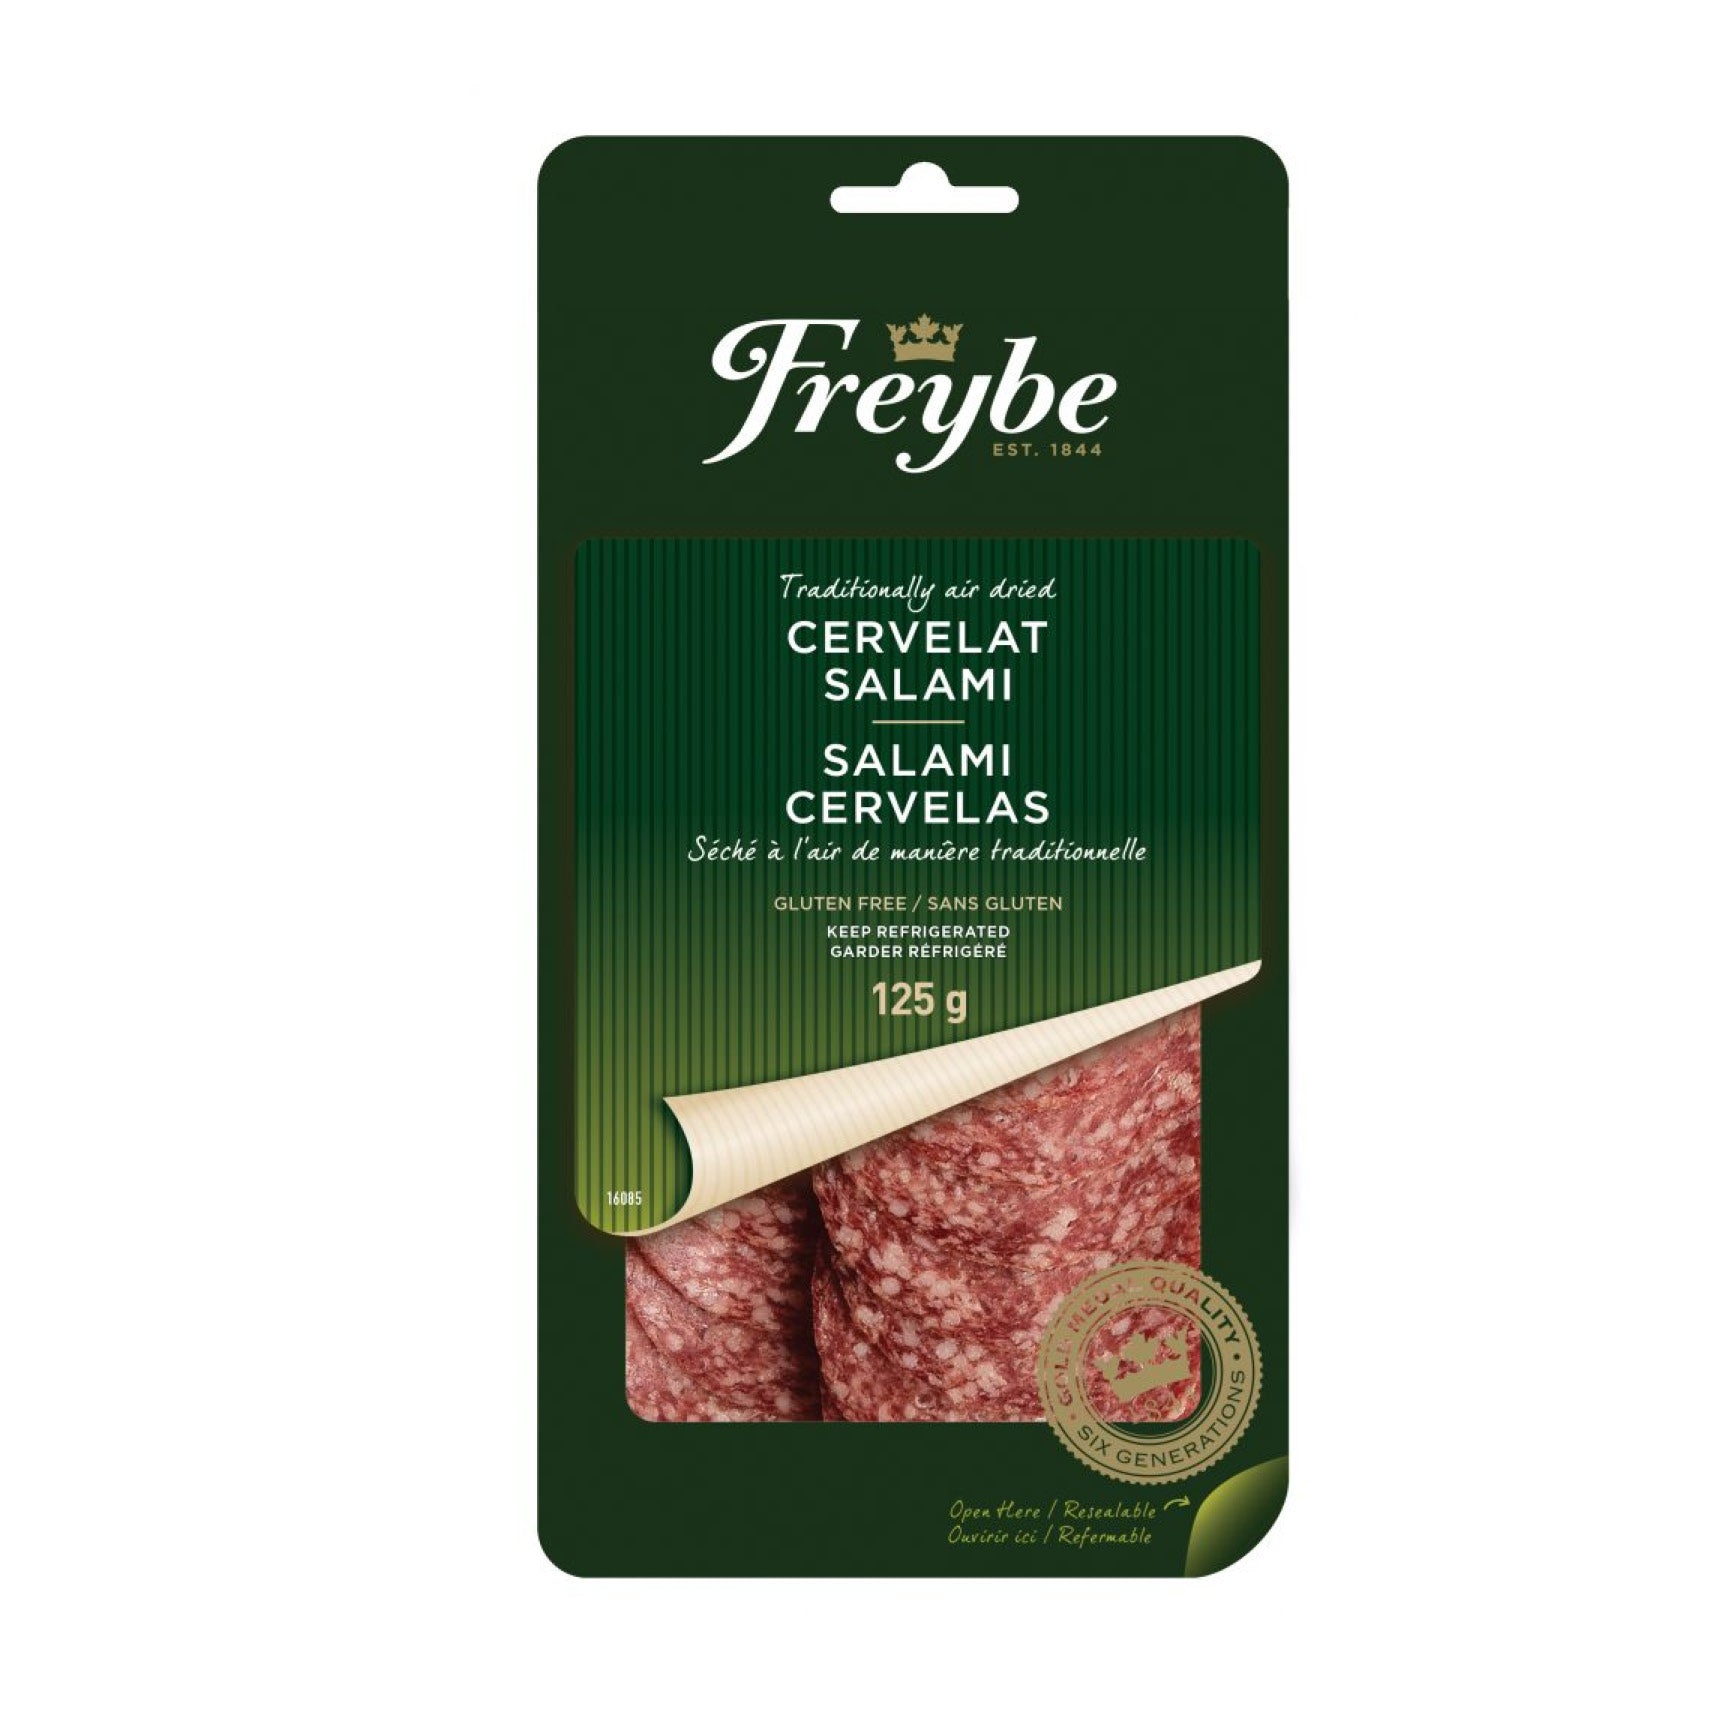 Freybe Cervelat Salami Slices, 125g